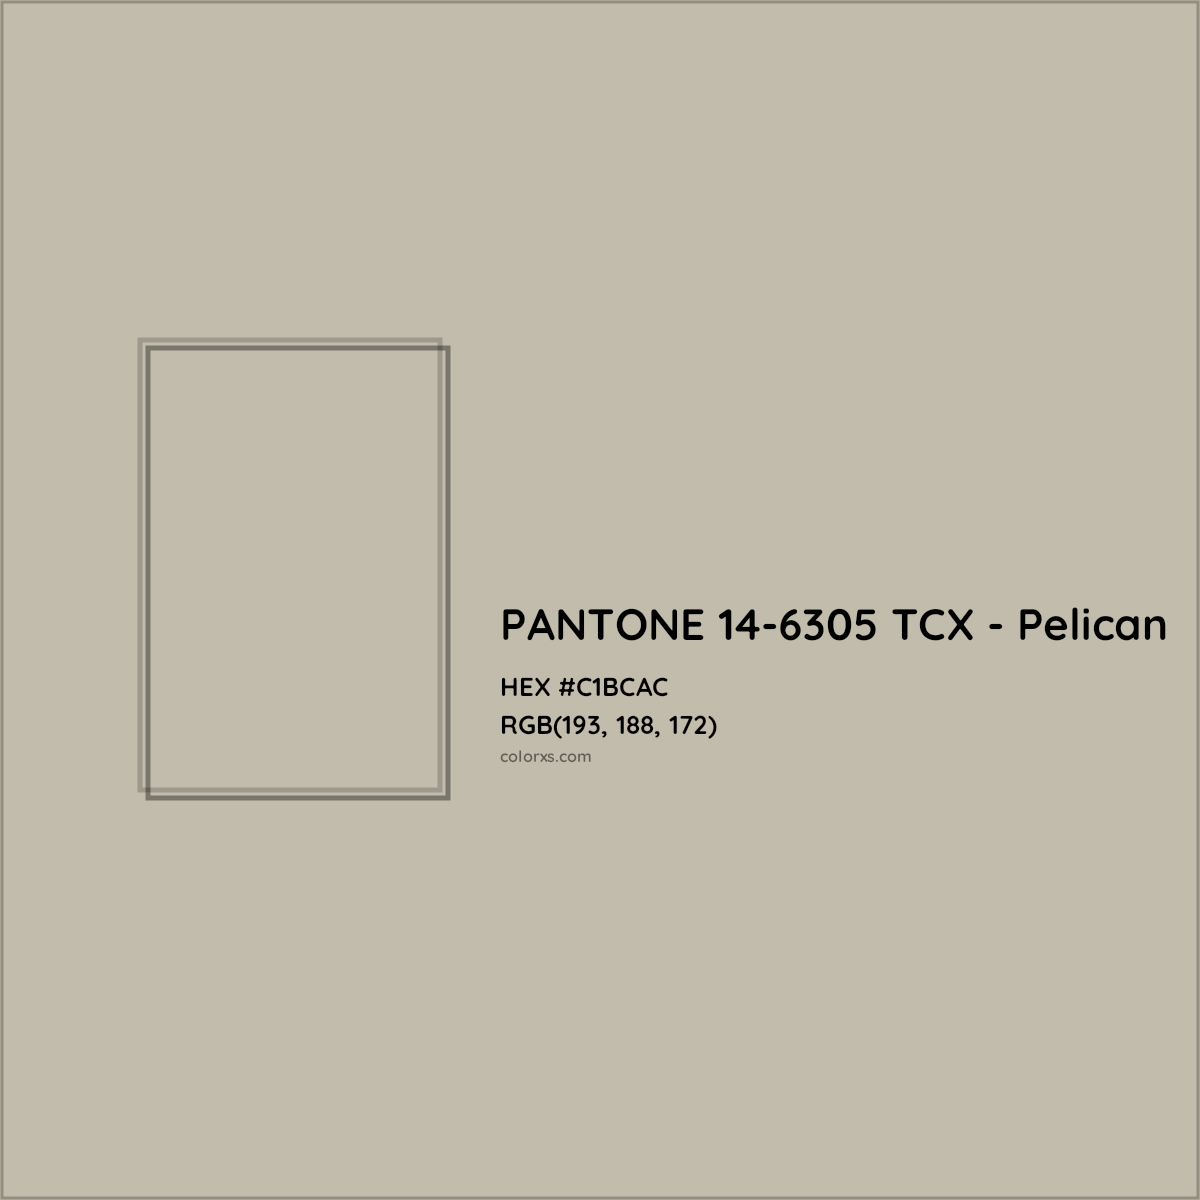 HEX #C1BCAC PANTONE 14-6305 TCX - Pelican CMS Pantone TCX - Color Code